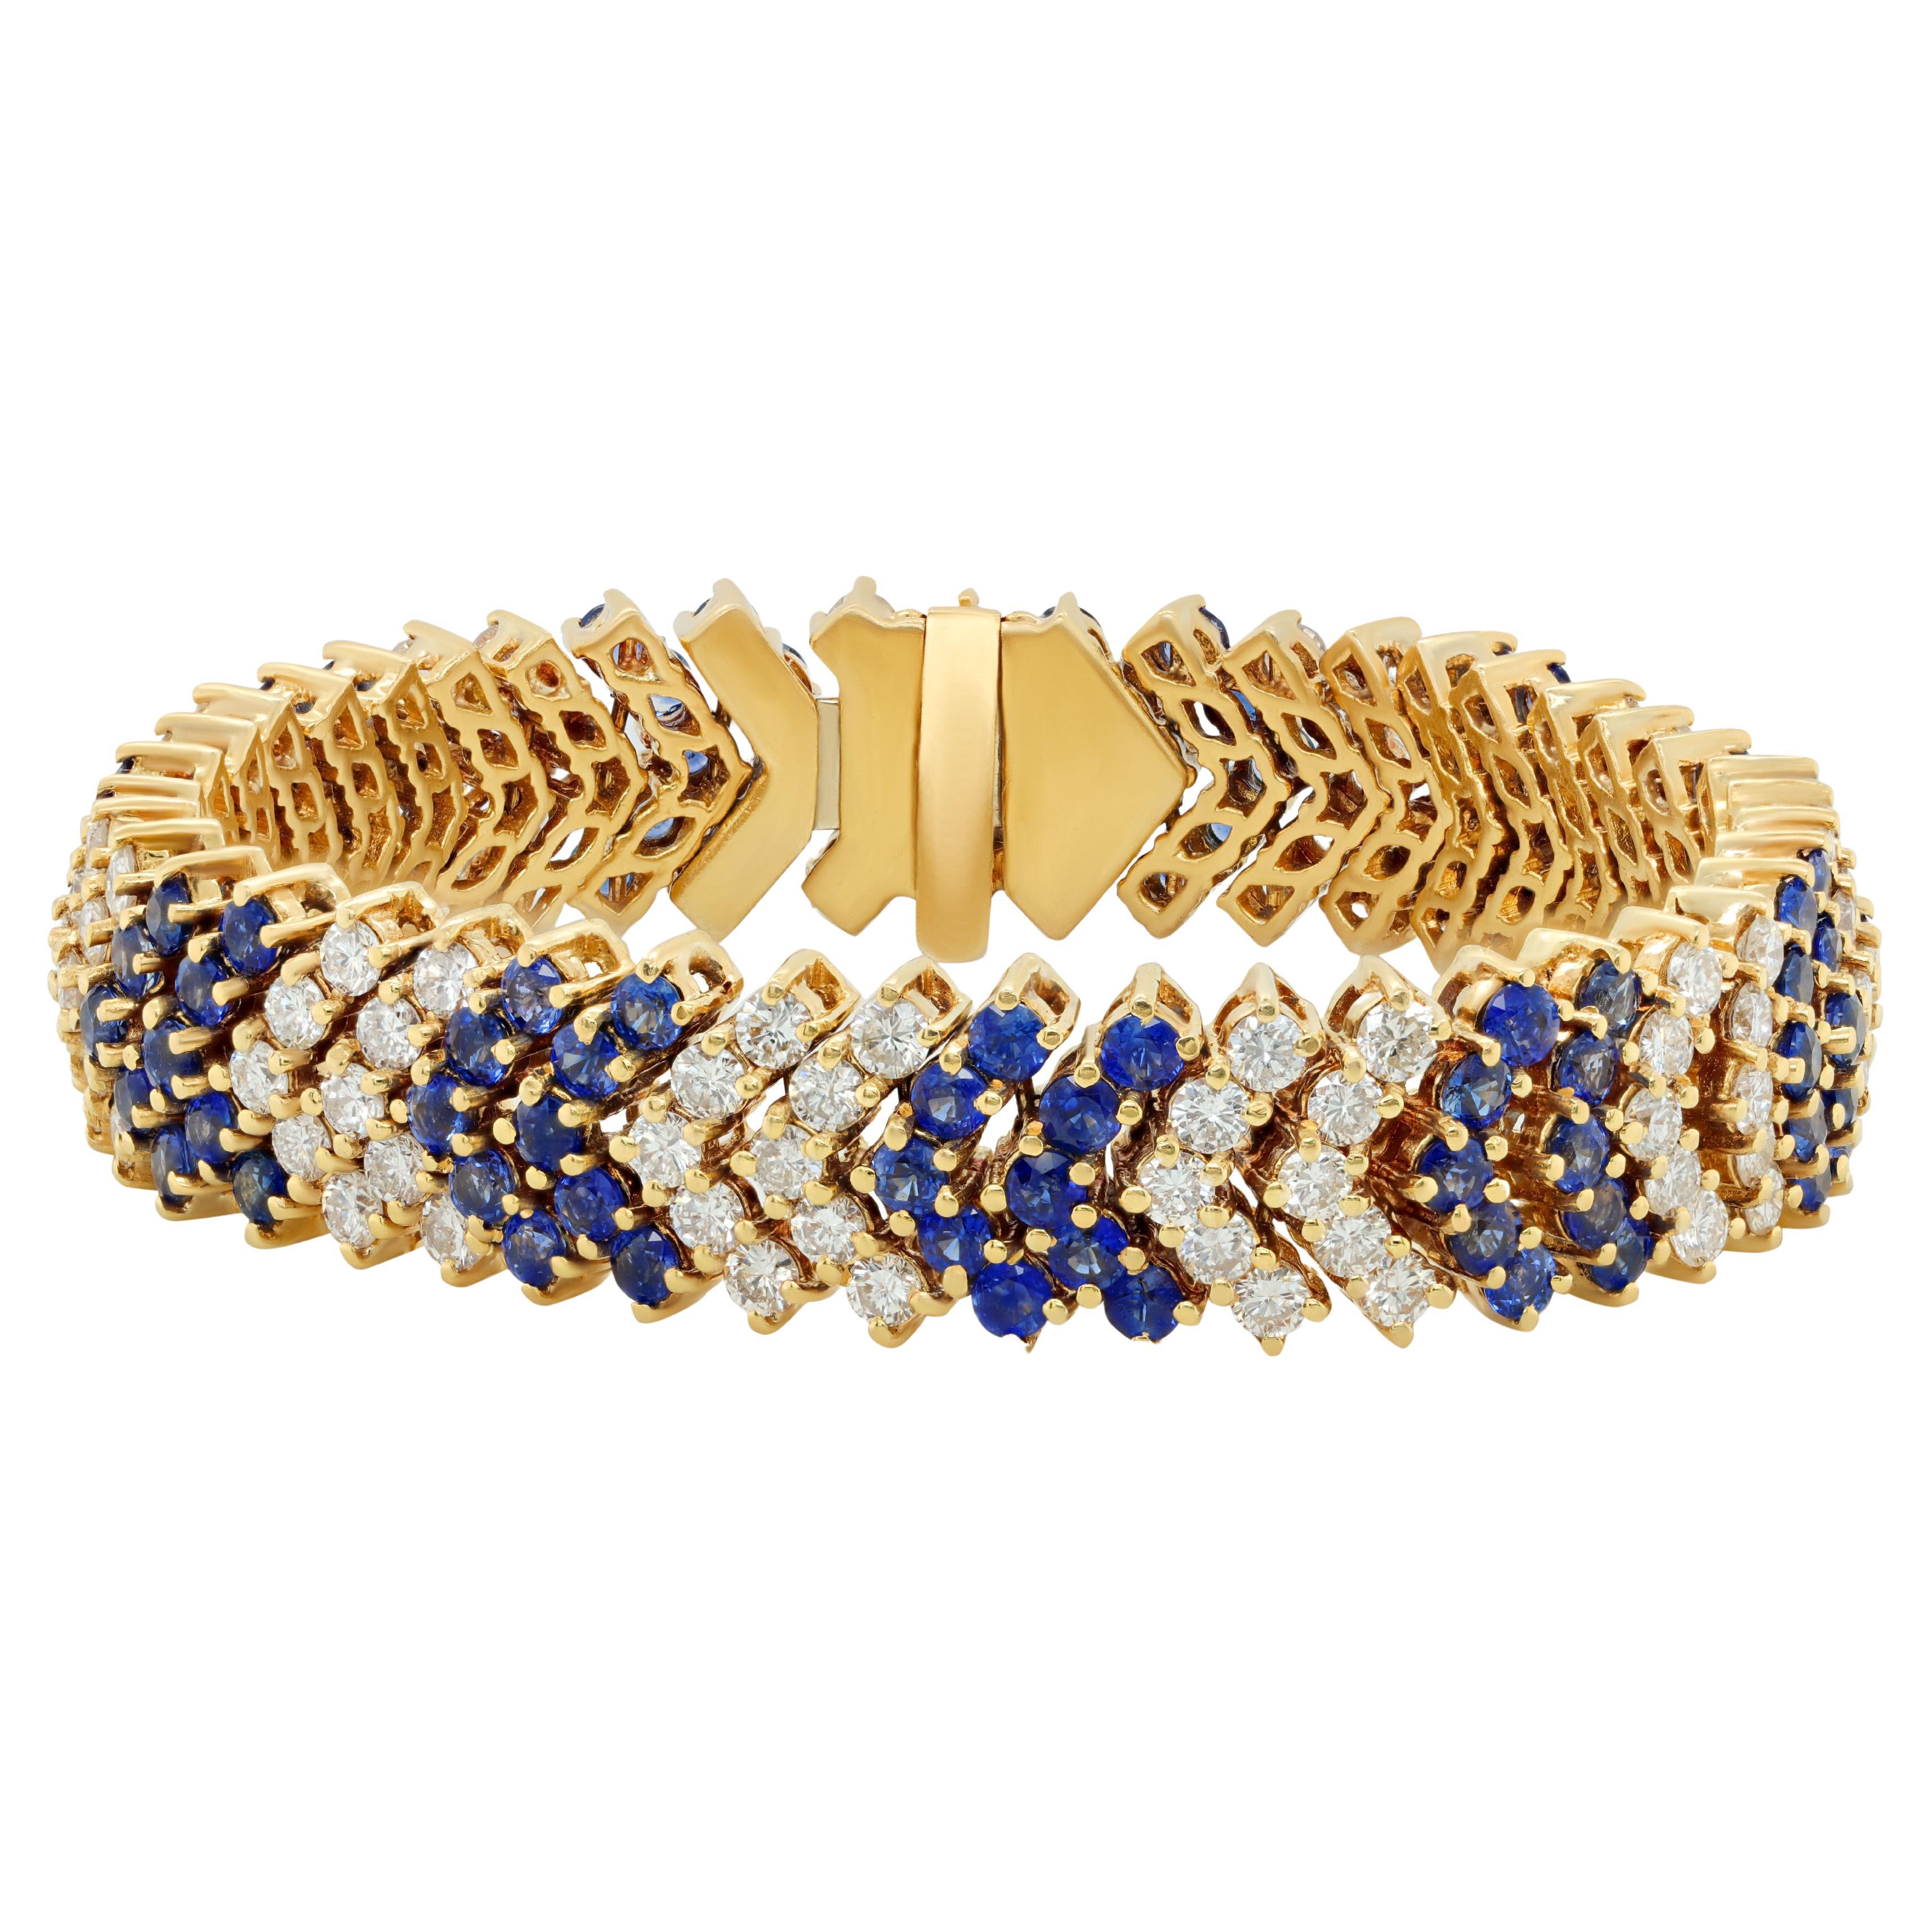 Diana M. 14.39 Carat Blue Sapphire and Diamond V-Shaped Piece Bracelet For Sale